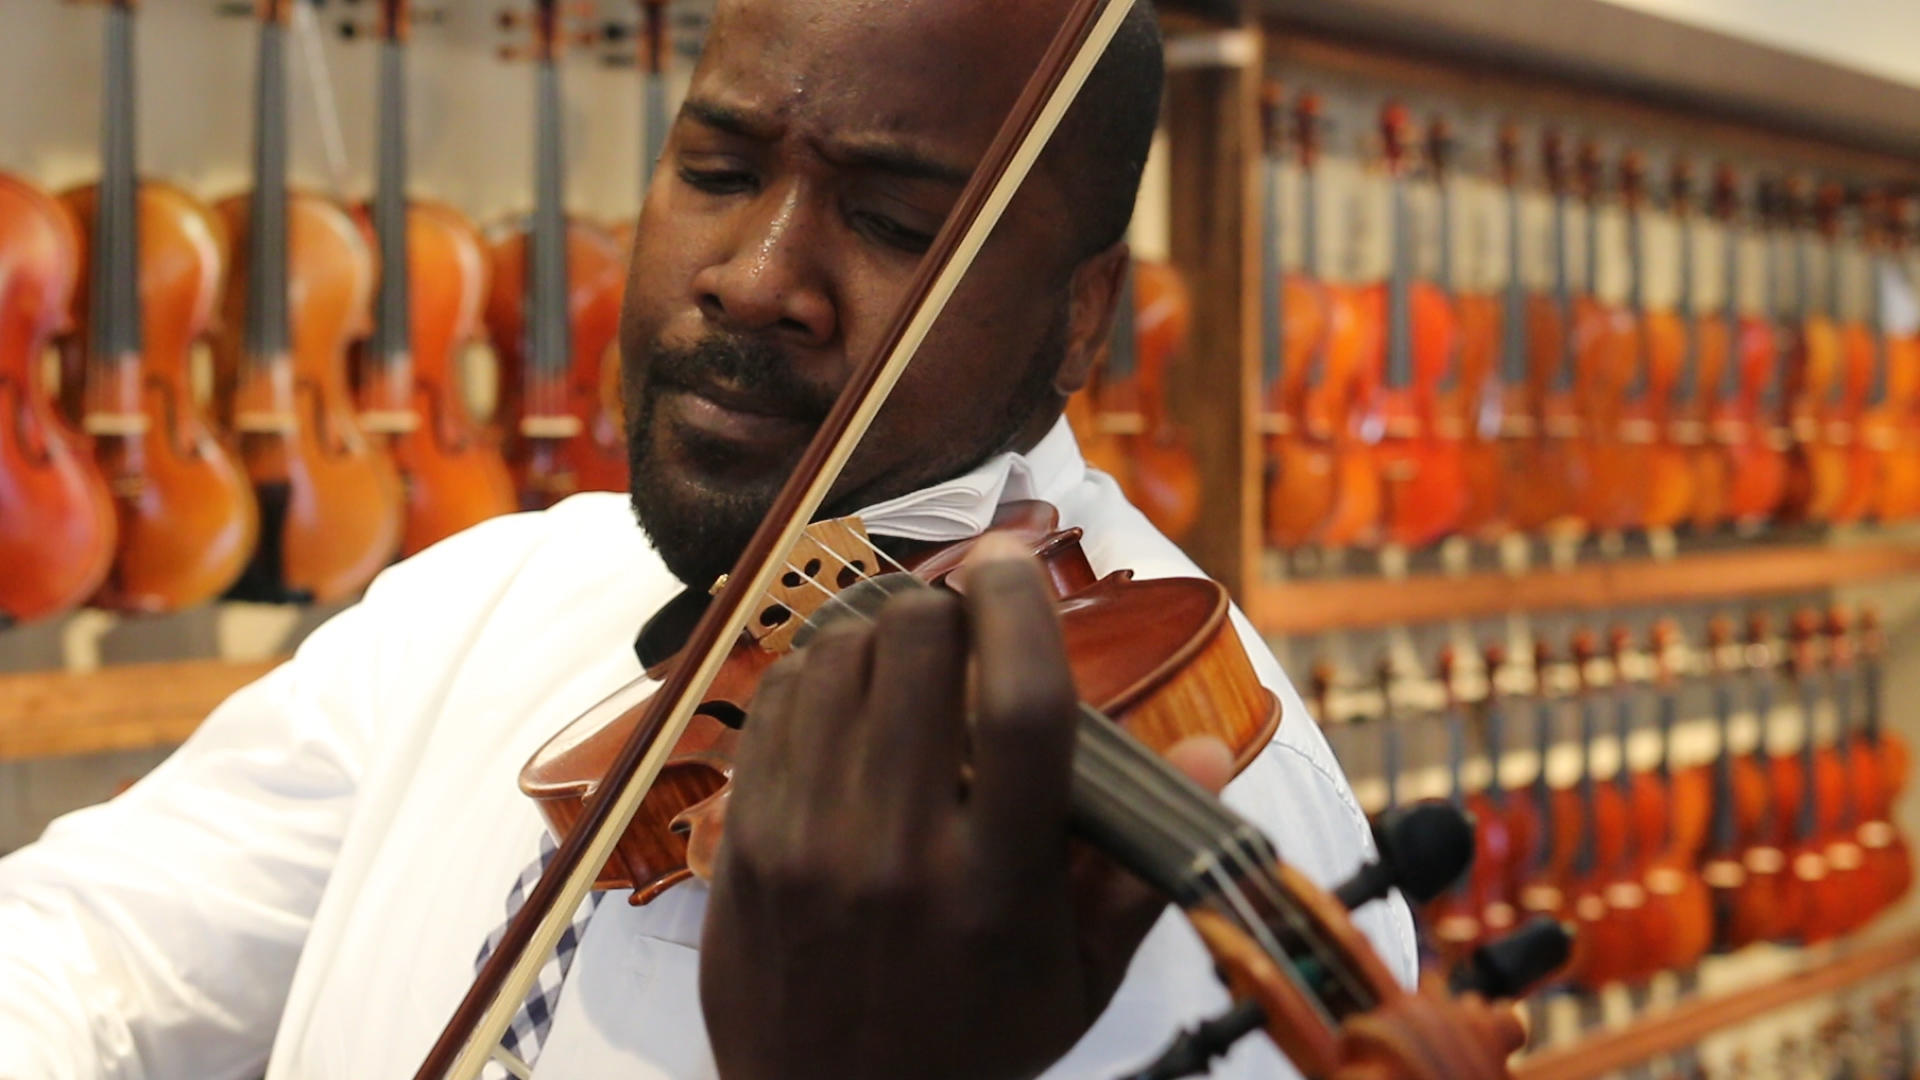 Playing the Violin at The Violin Shop in Tampa